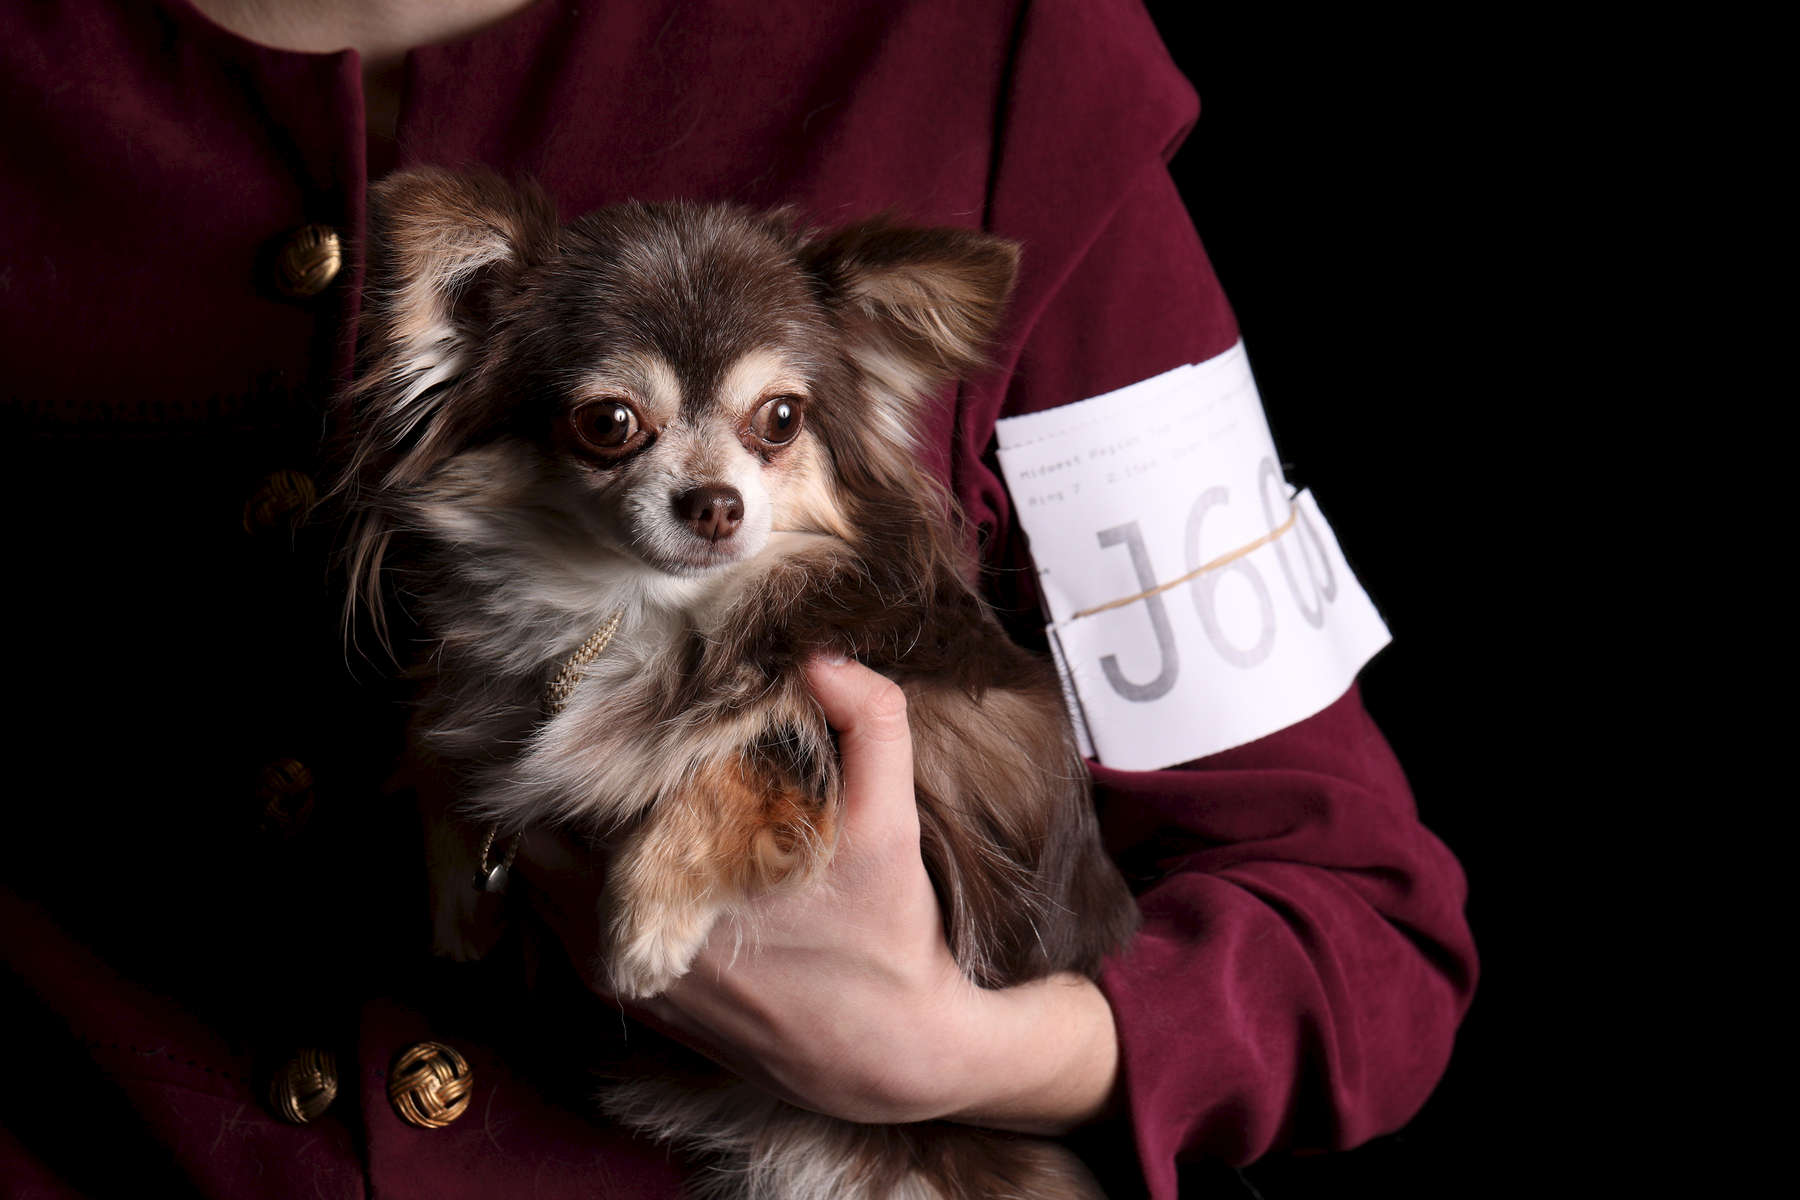 Sunny, a 7-year-old Chihuahua, shown by Samantha Van Buren